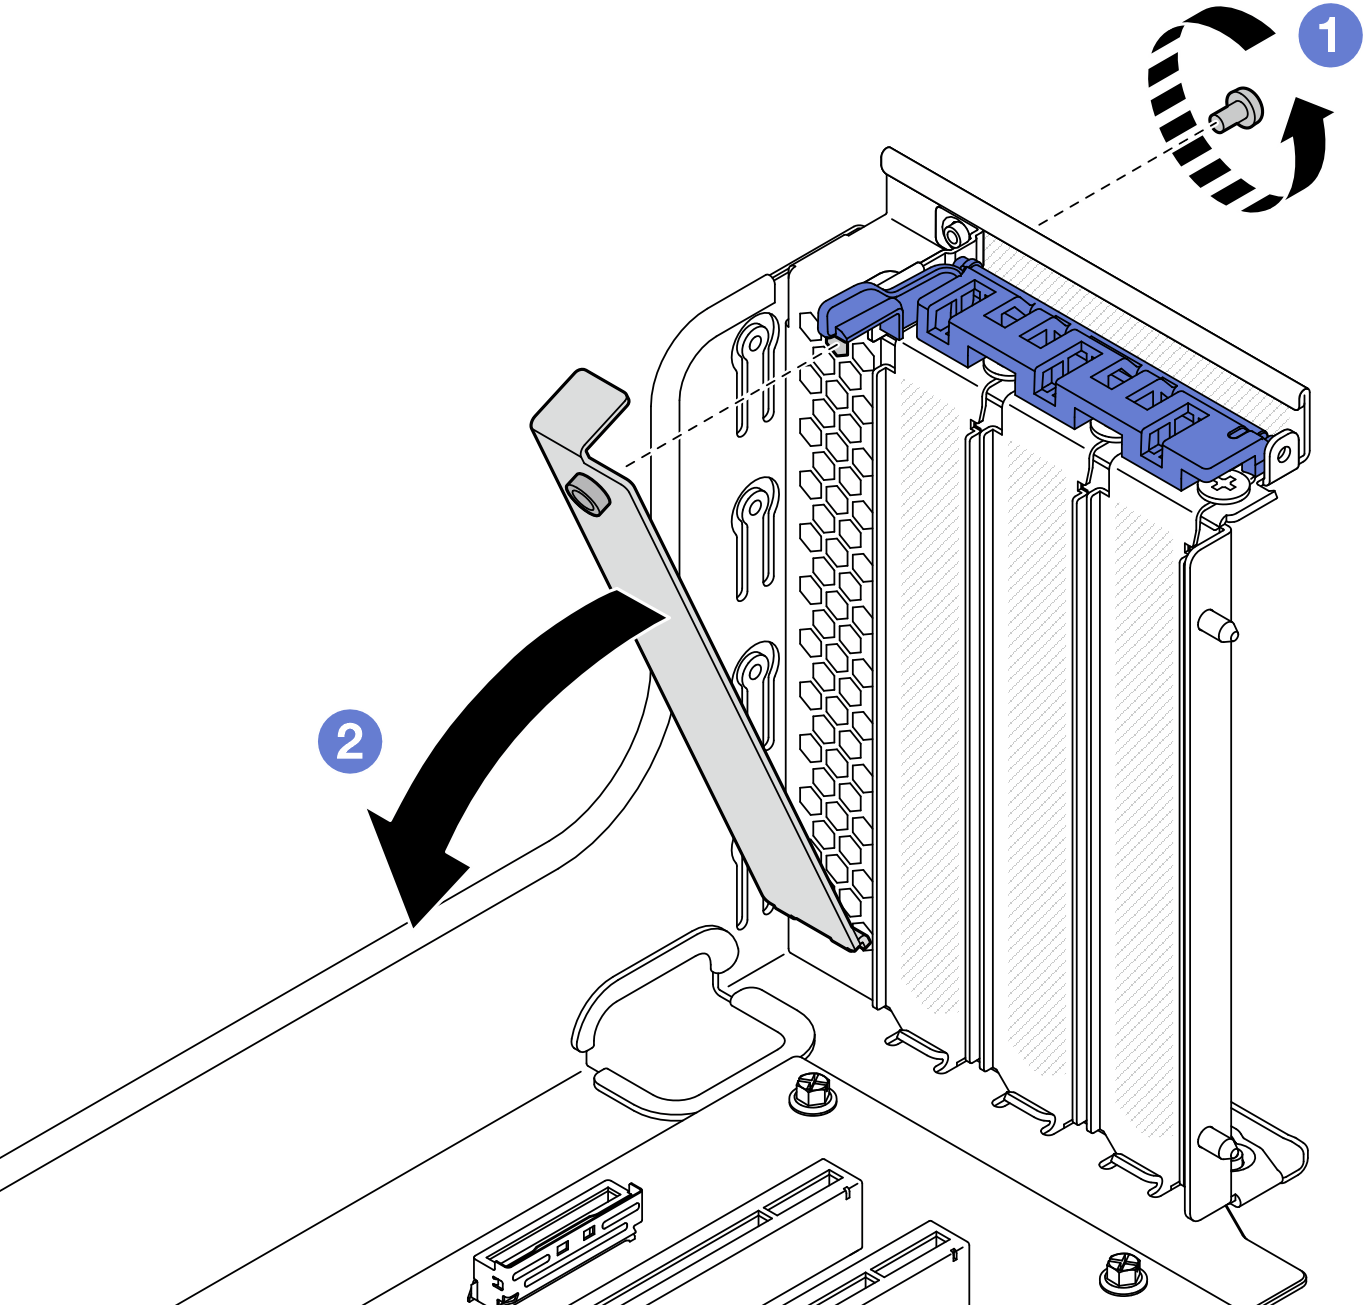 PCIe riser air flow control removal